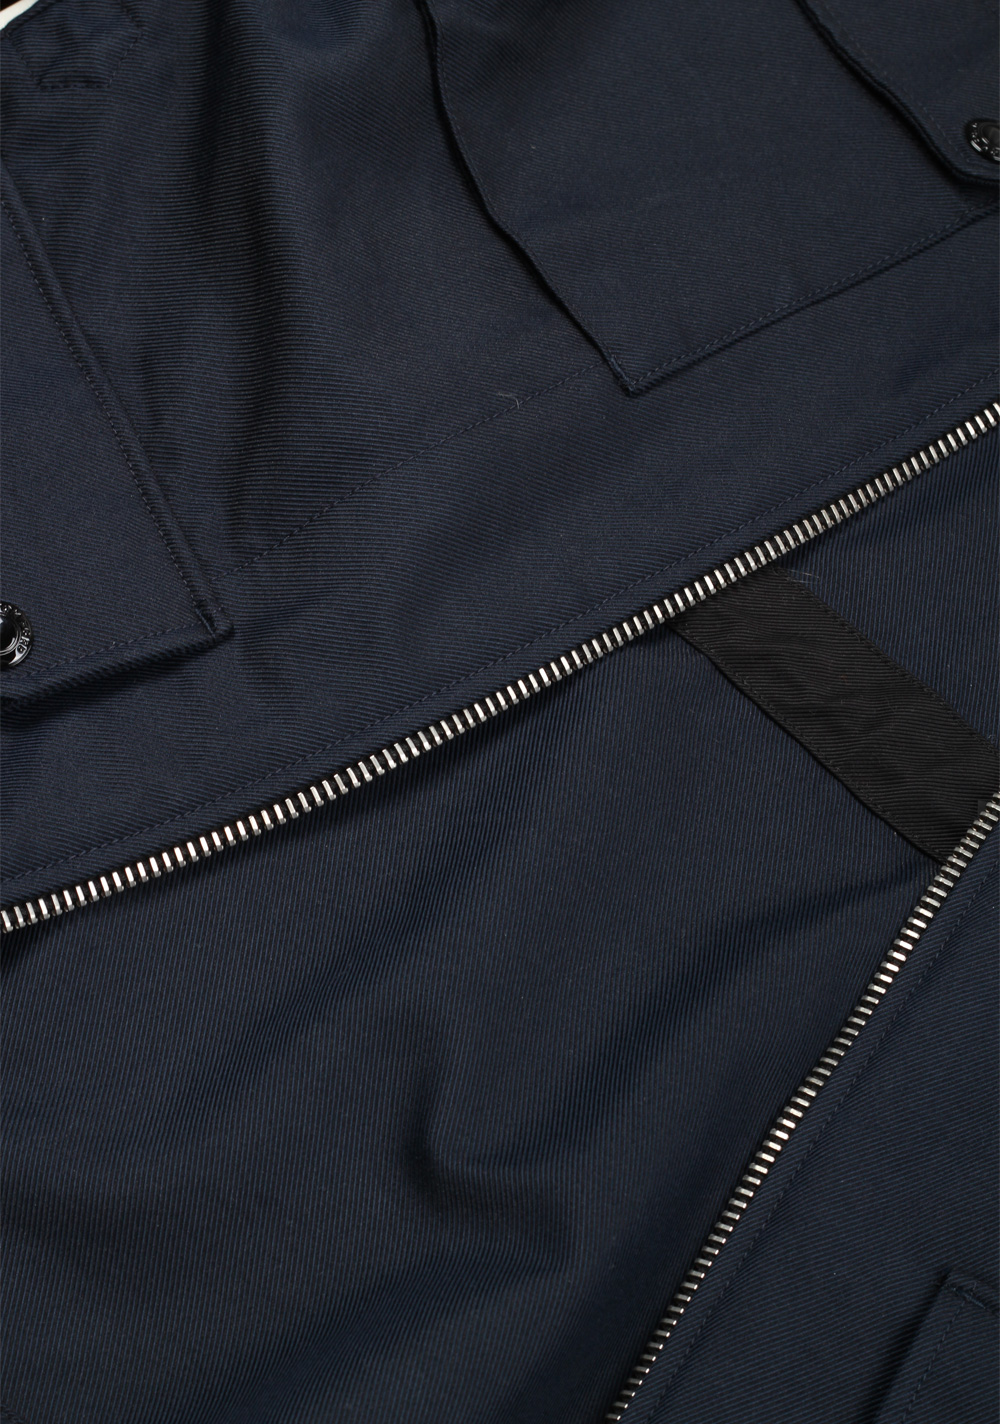 TOM FORD Blue Military Field James Bond Jacket Coat Size 54 / 44R U.S. Outerwear | Costume Limité